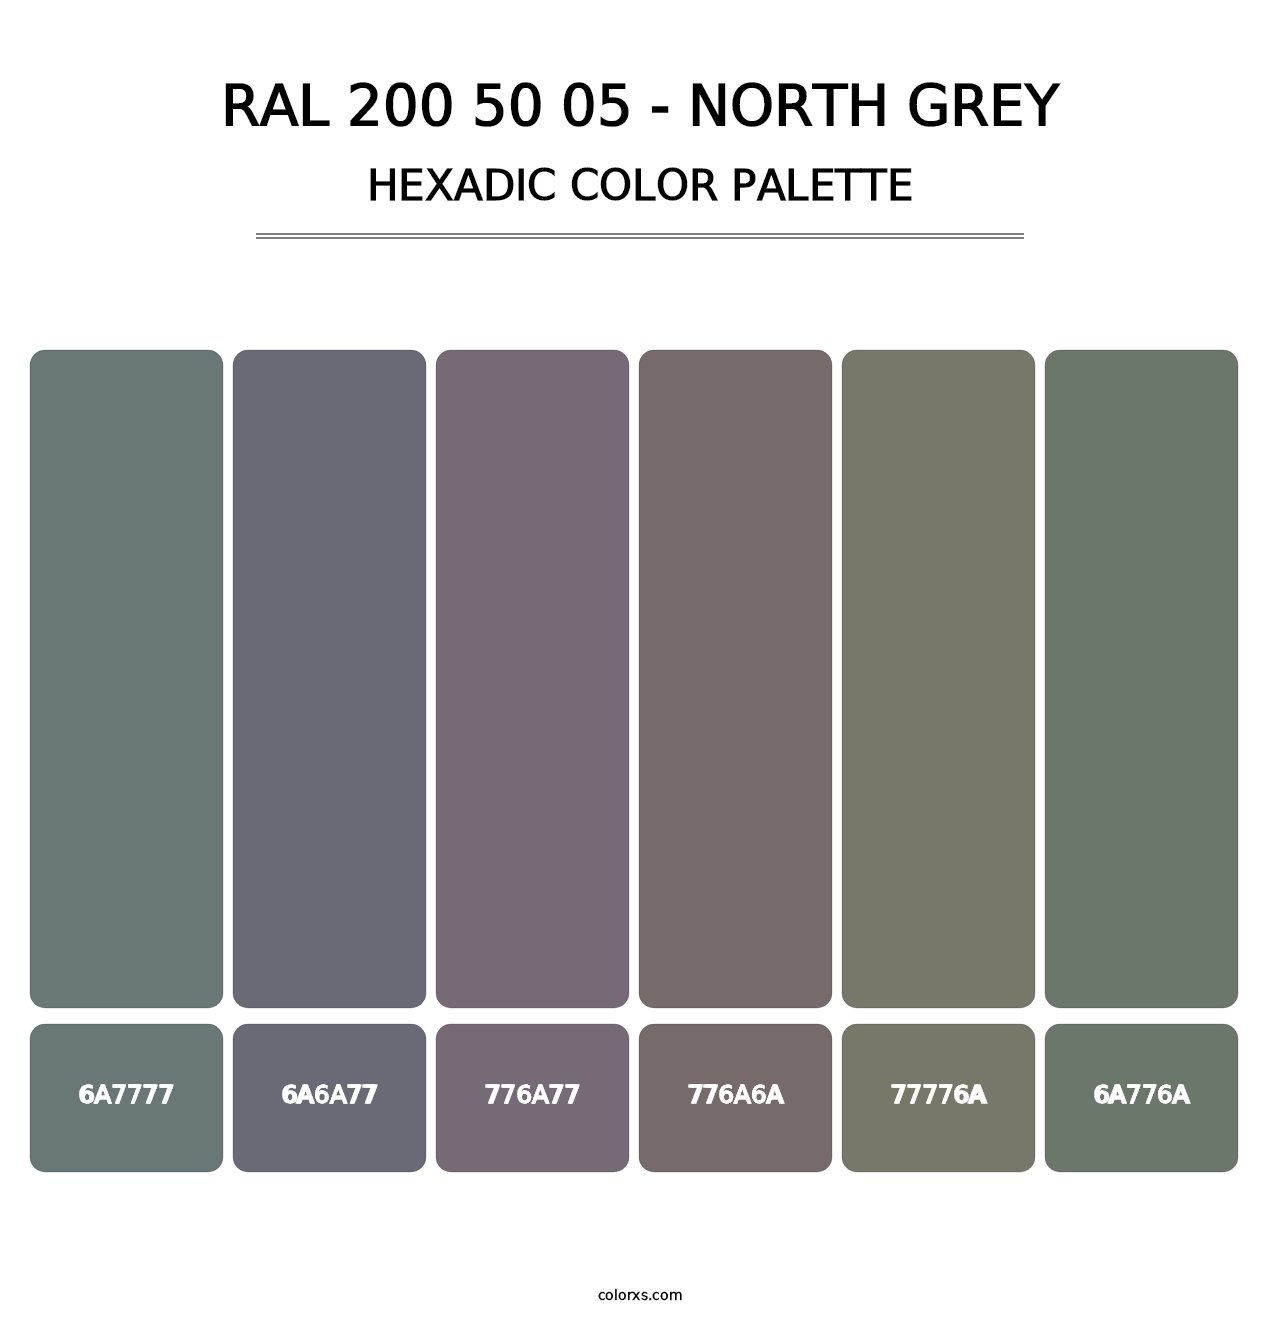 RAL 200 50 05 - North Grey - Hexadic Color Palette